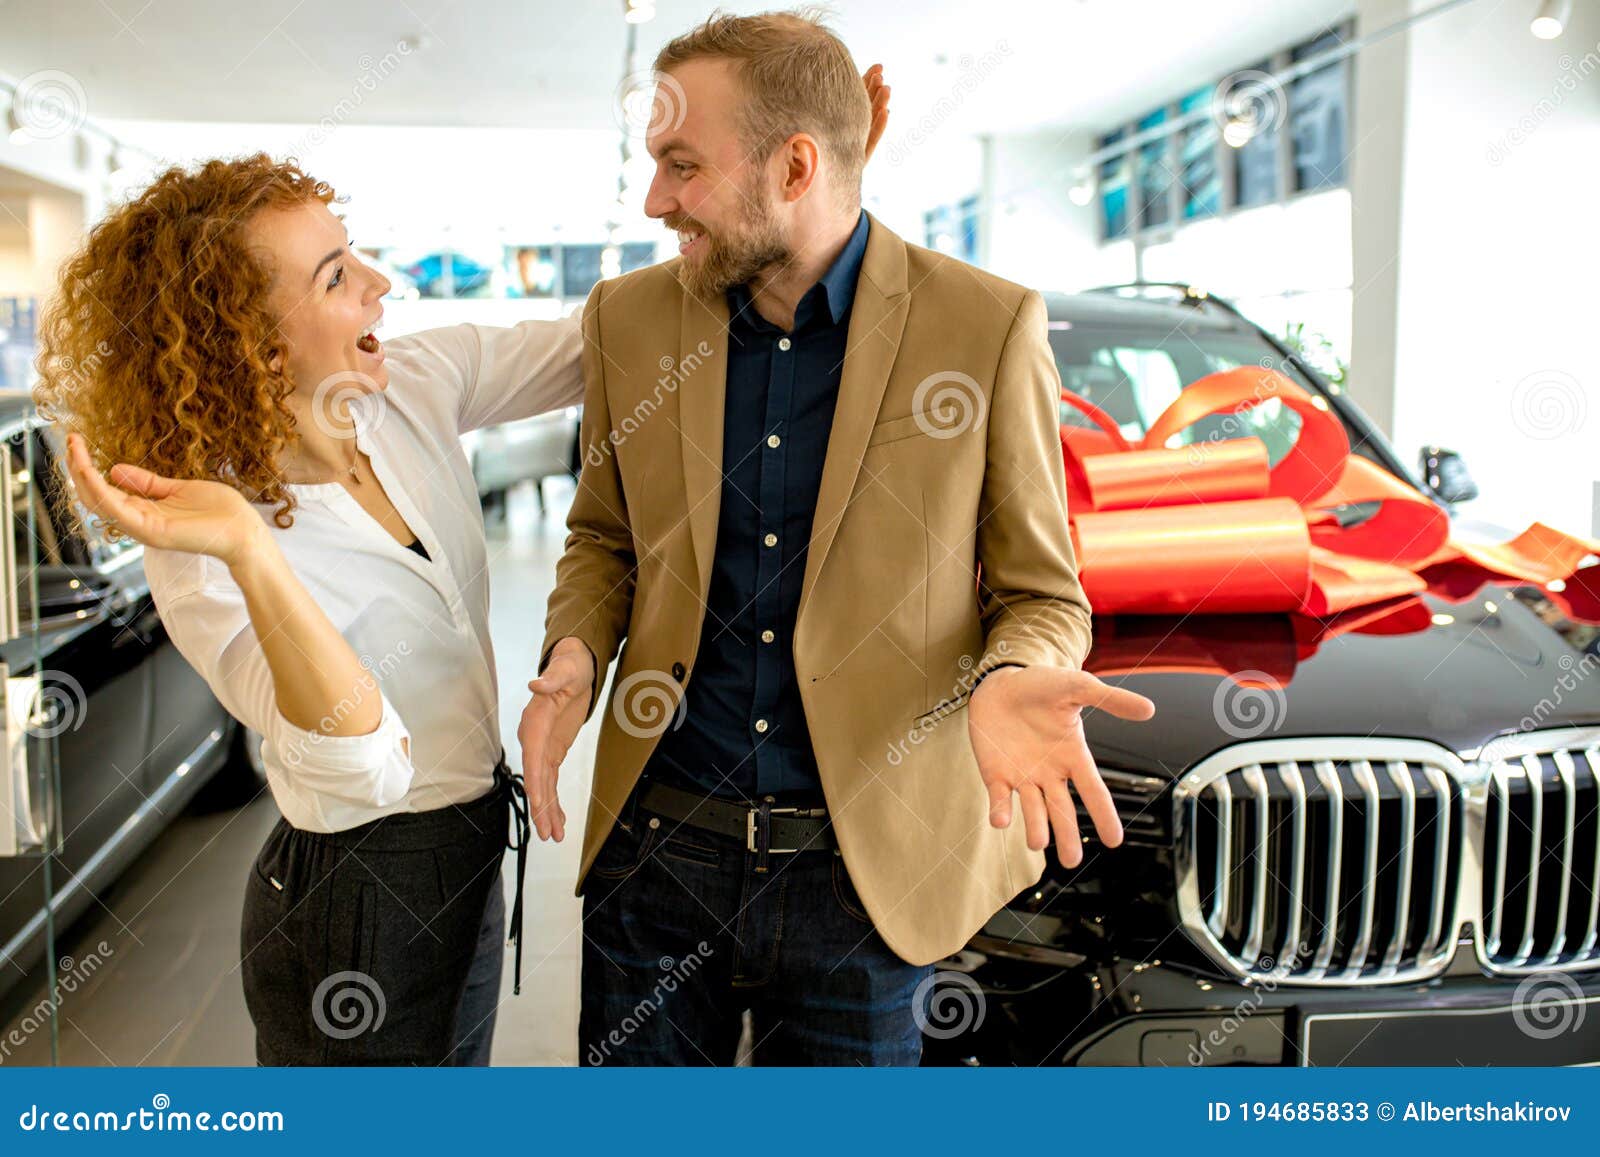 beautiful lady make surprise to husband in dealership